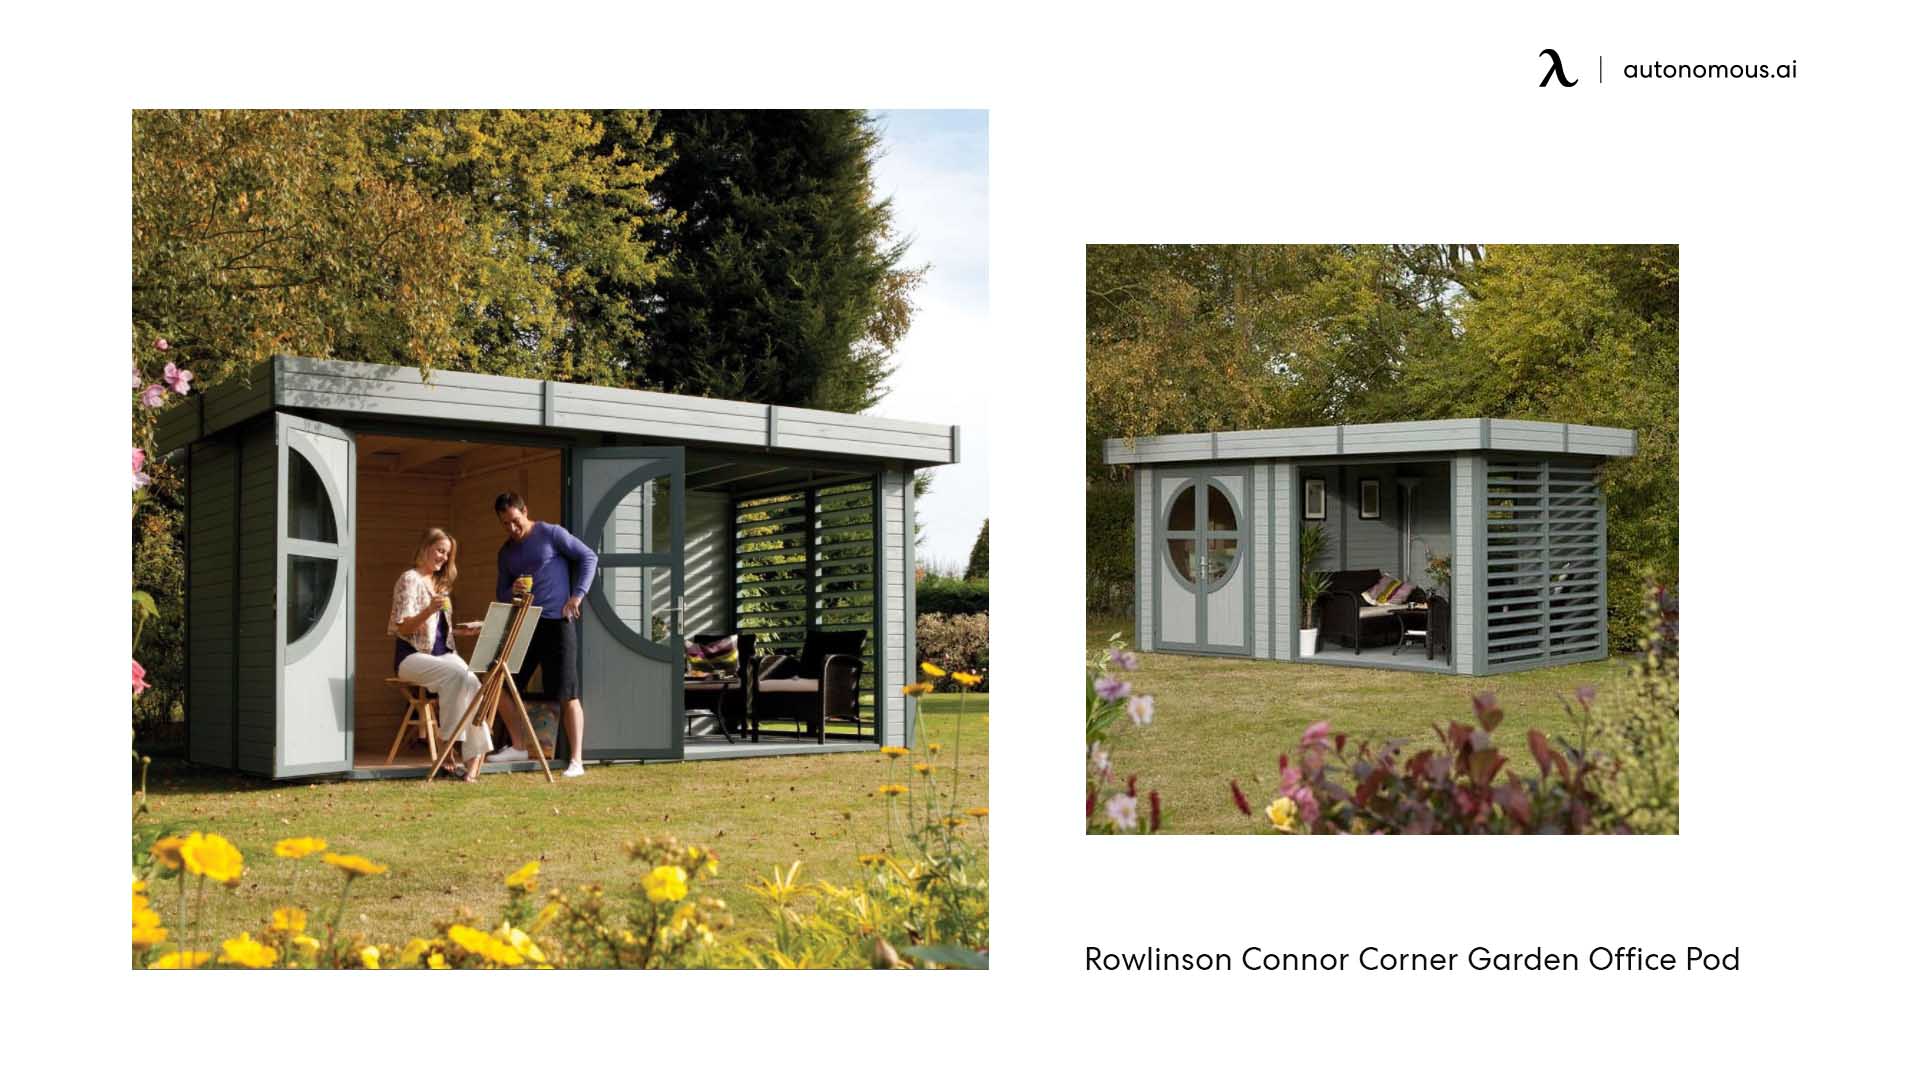 Rowlinson Connor backyard office pod in california